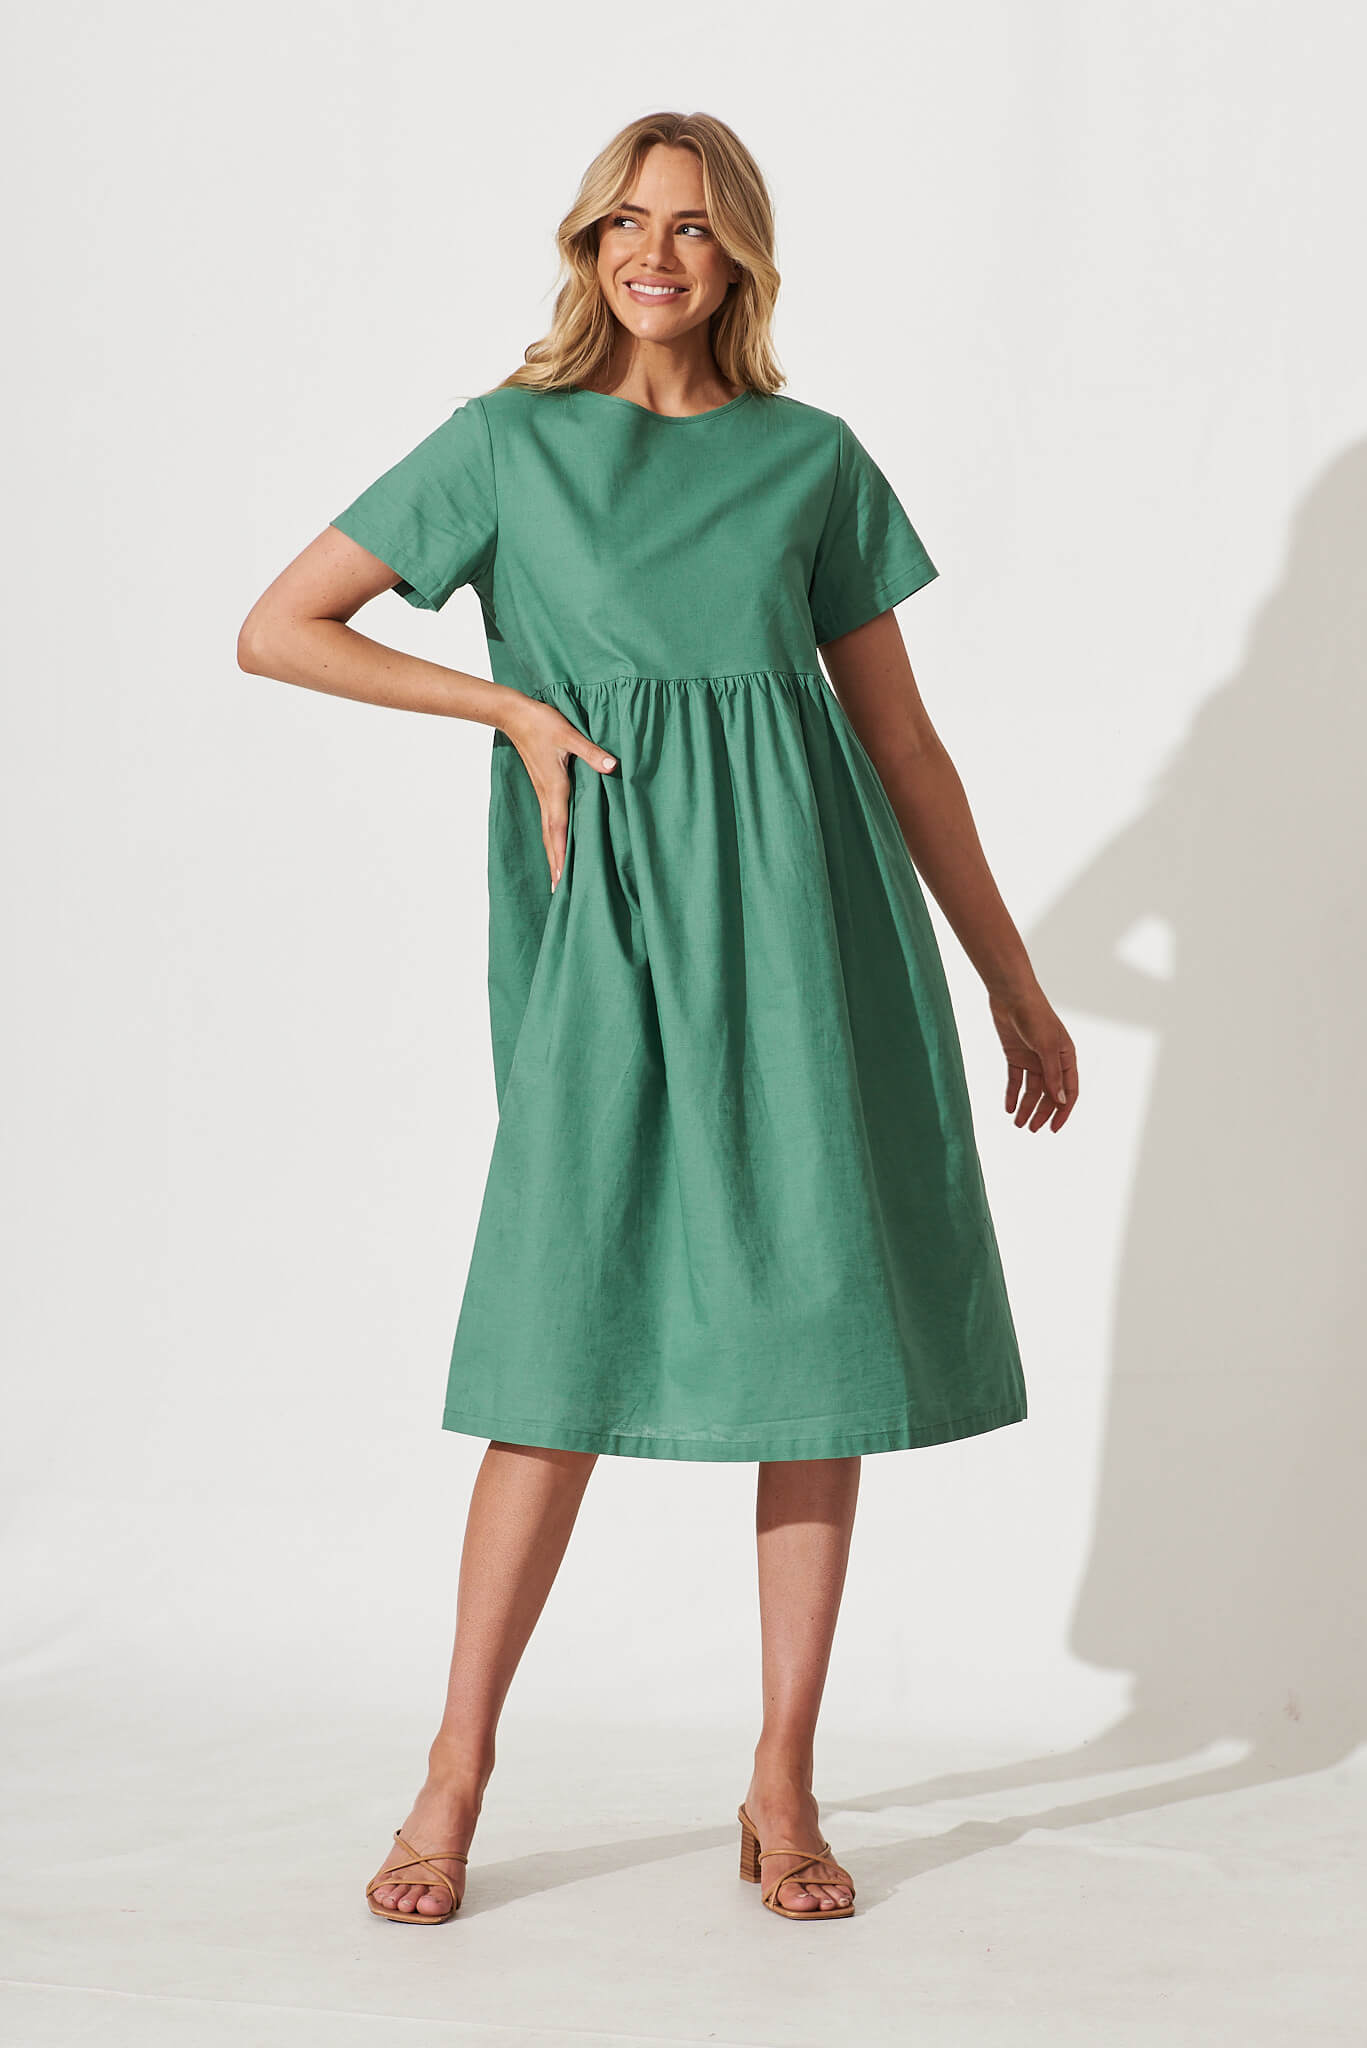 Seaside Midi Smock Dress In Sage Green Linen Cotton - full length